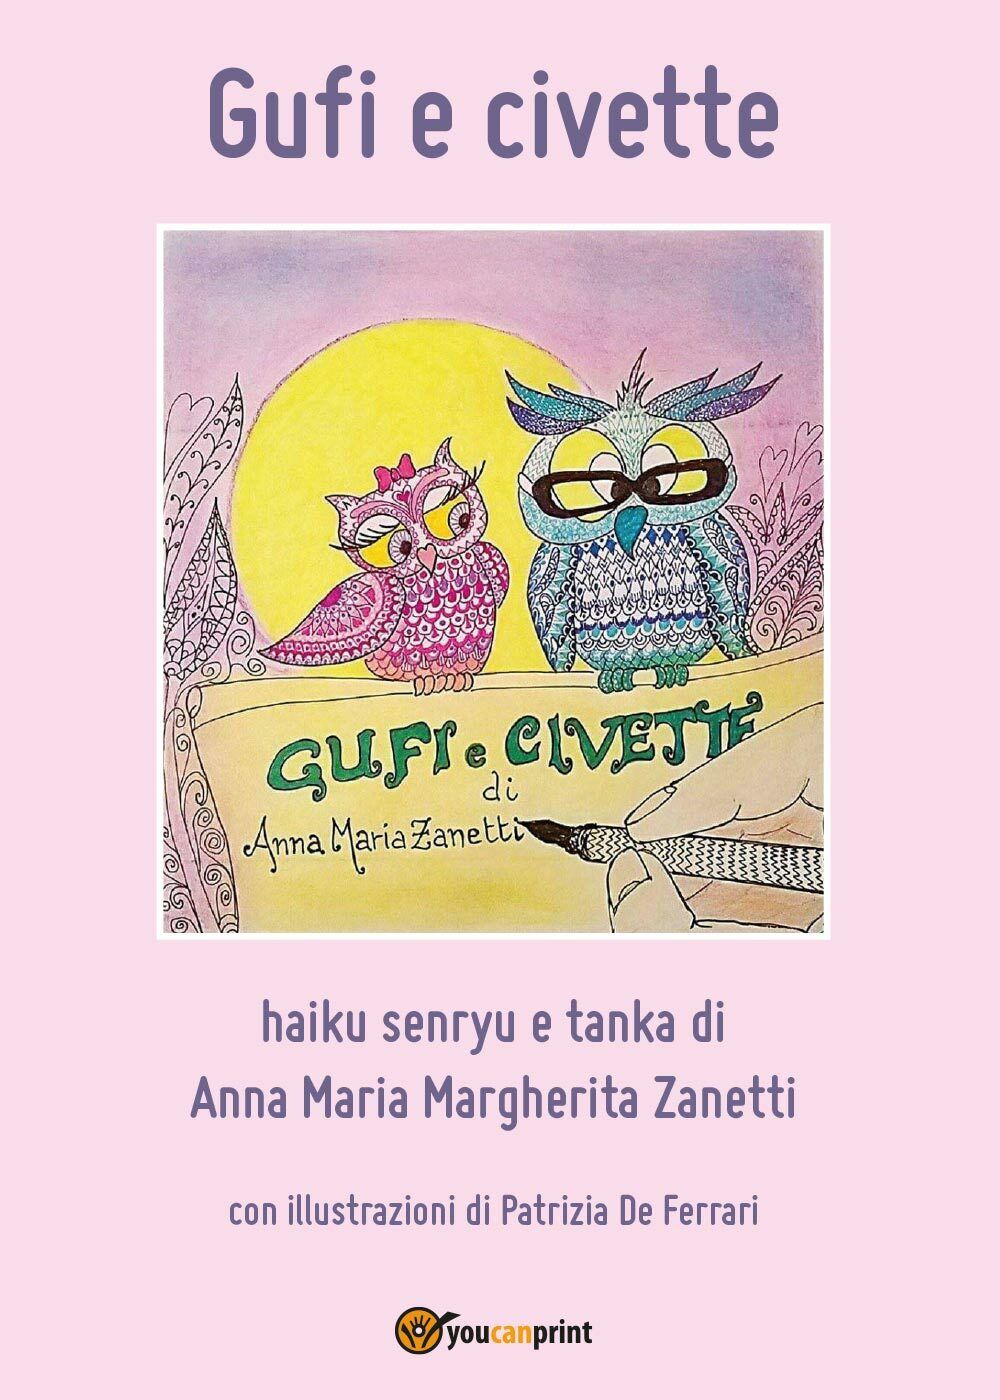 Gufi e civette di Anna Maria Margherita Zanetti,  2017,  Youcanprint